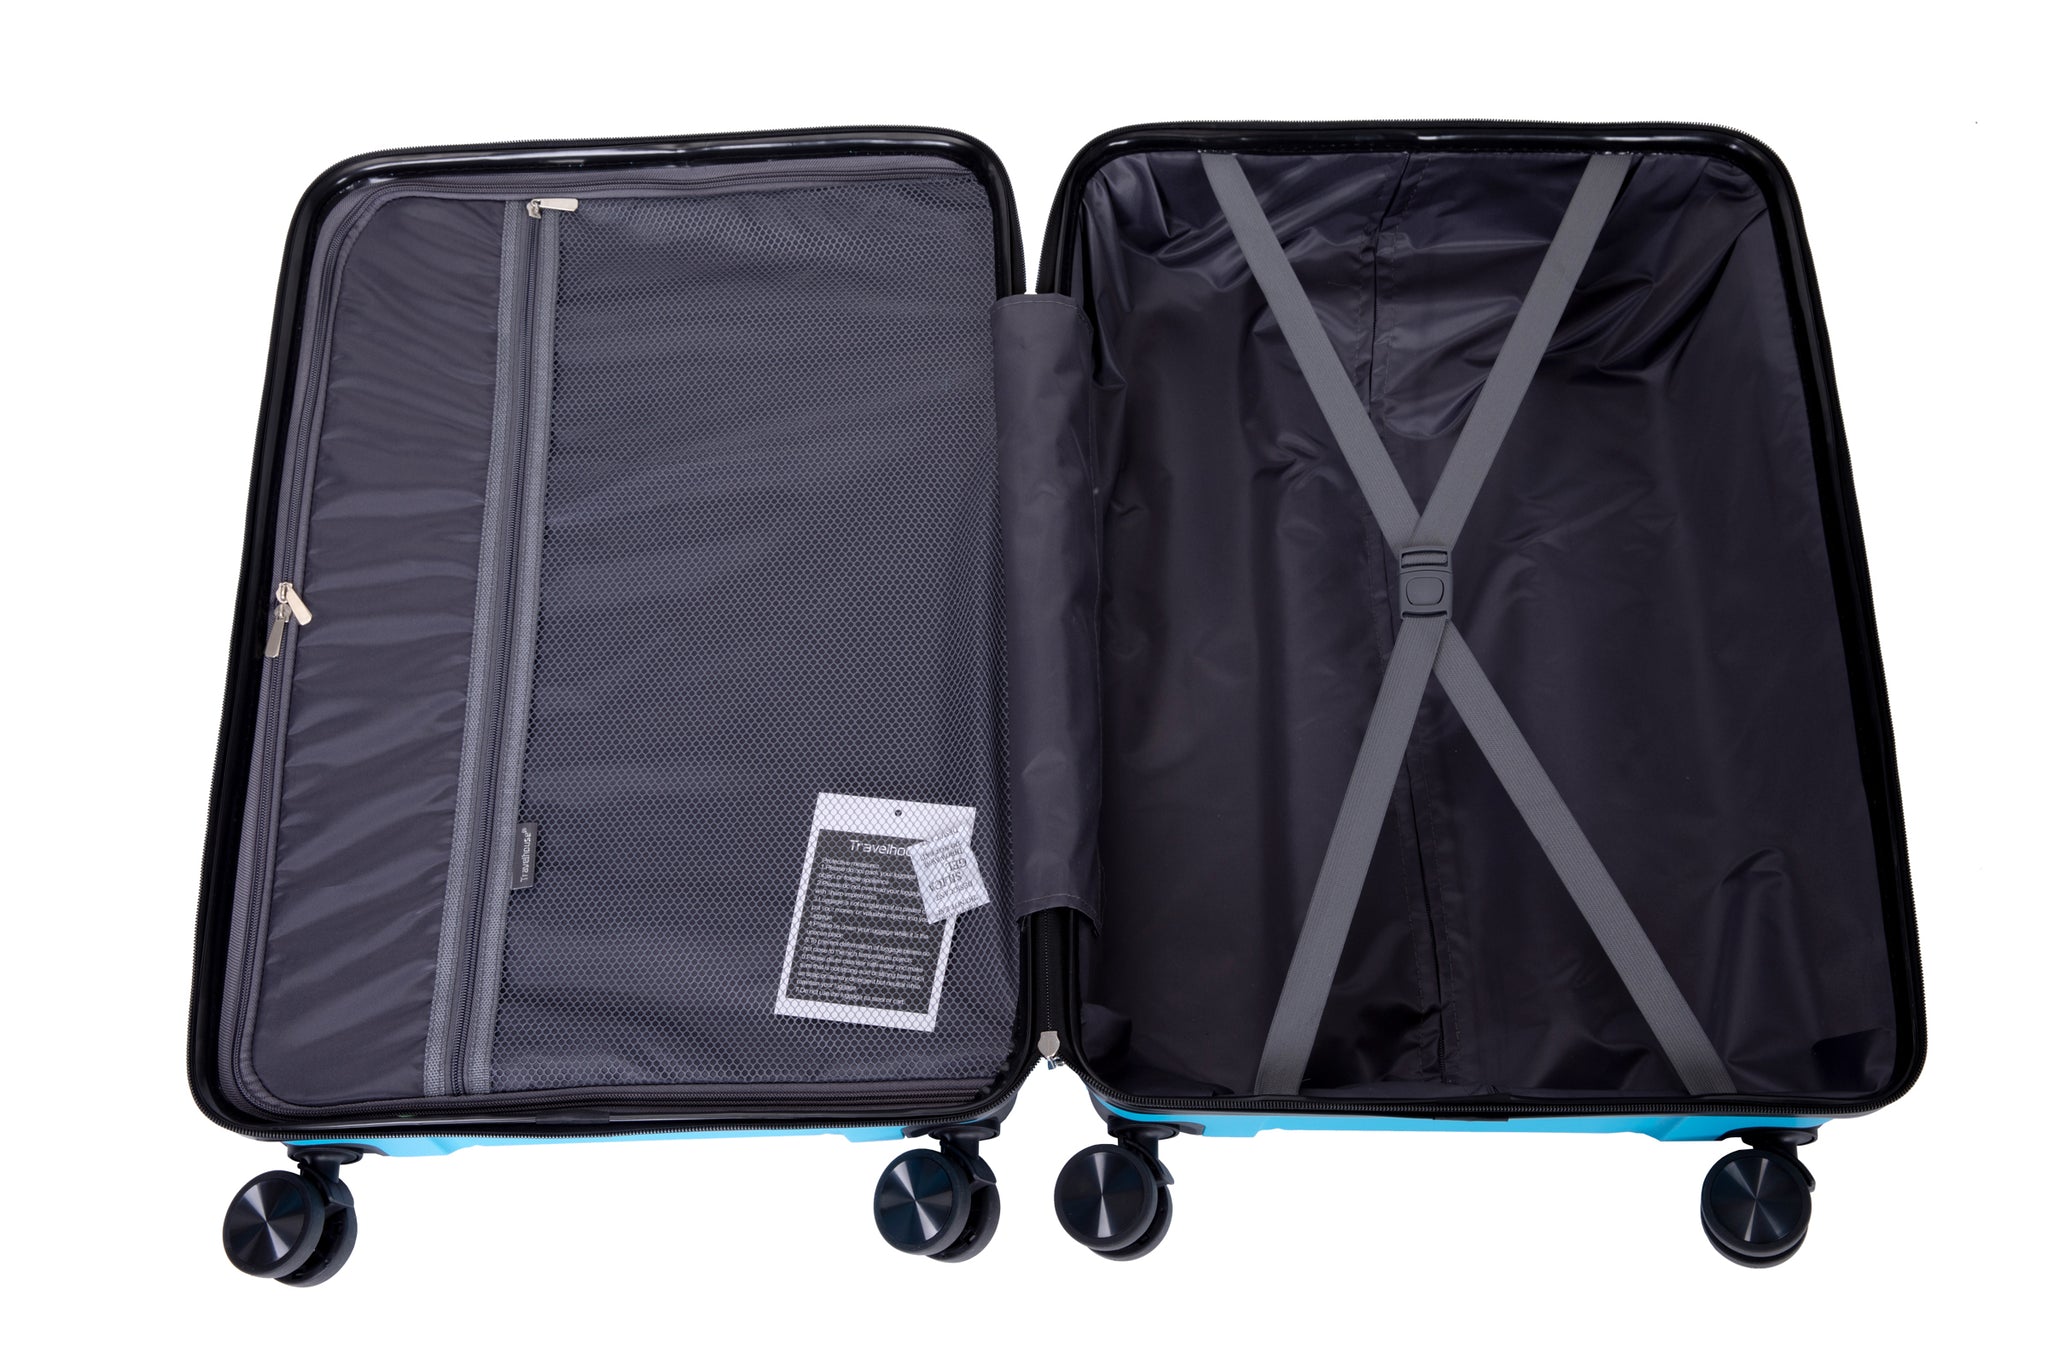 Hardshell Suitcase Spinner Wheels PP Luggage Sets light blue-polypropylene